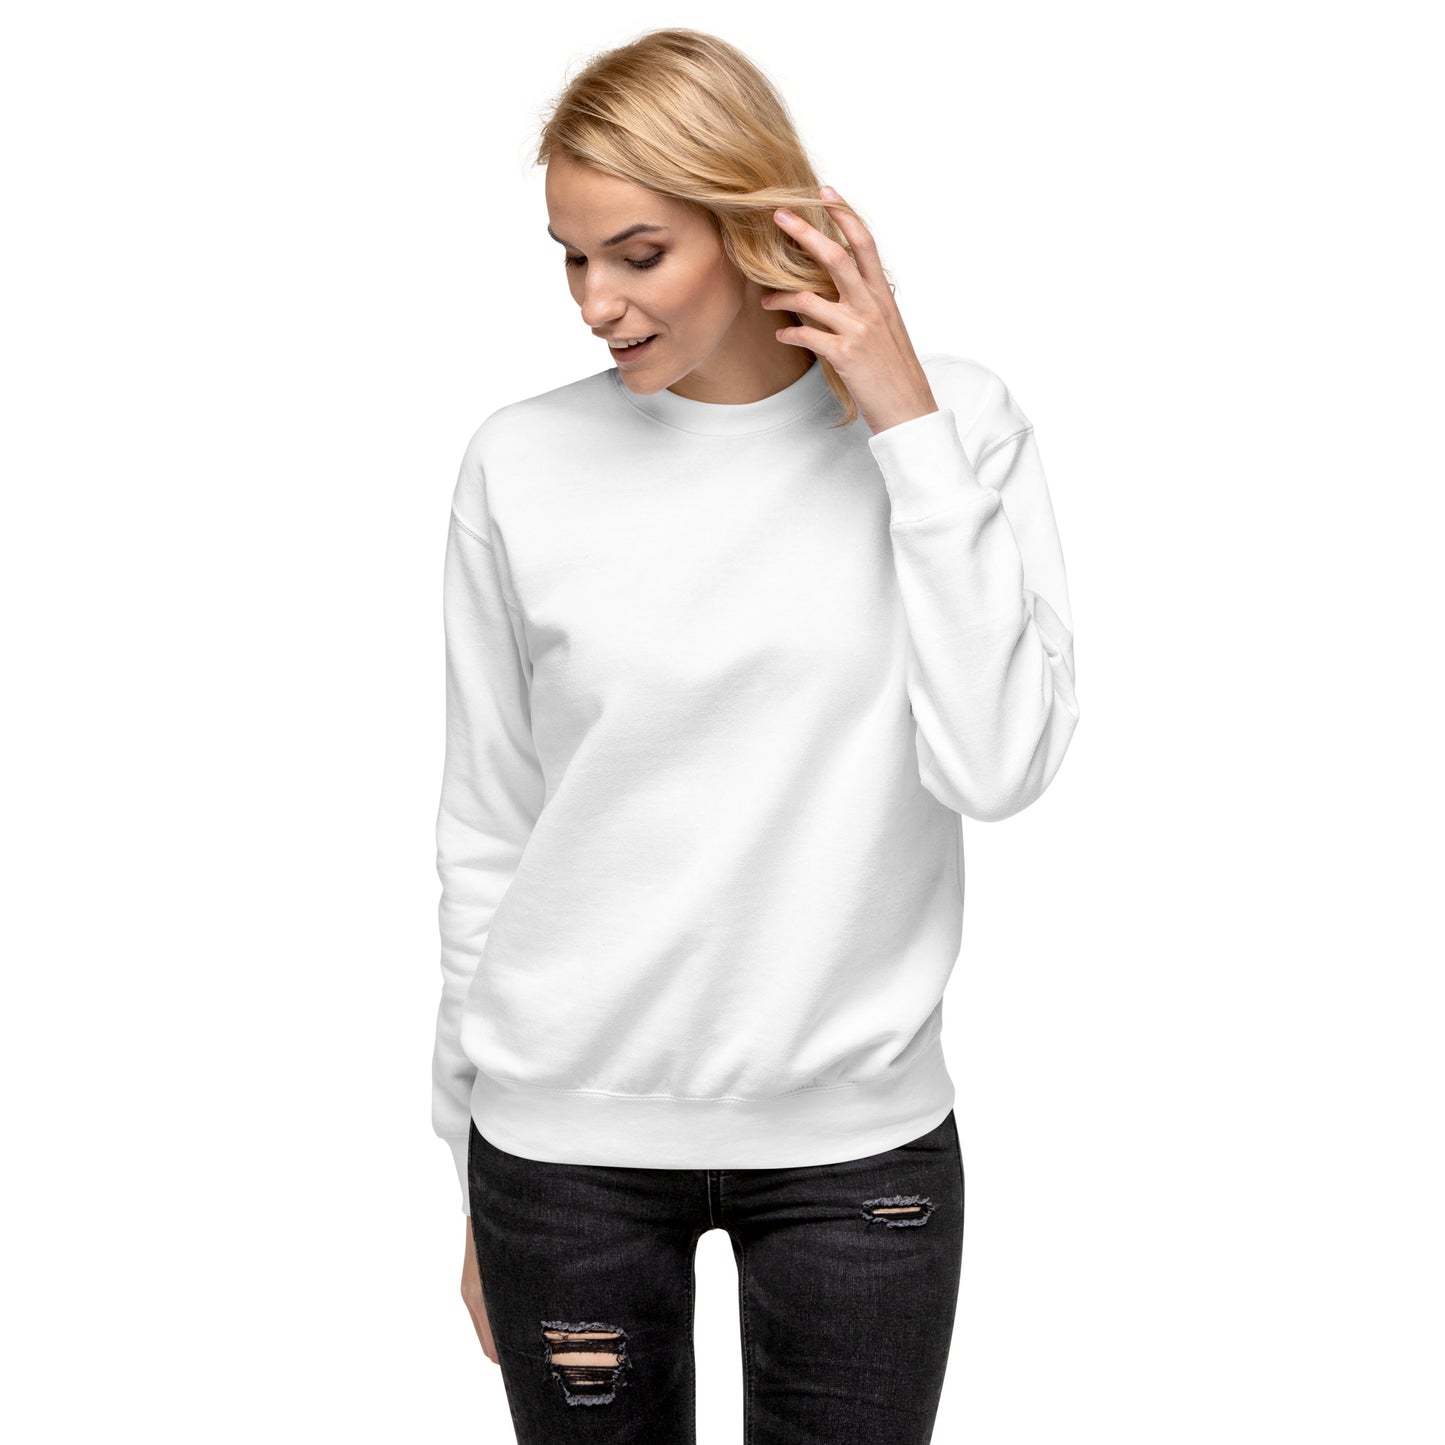 Unisex White Sweater